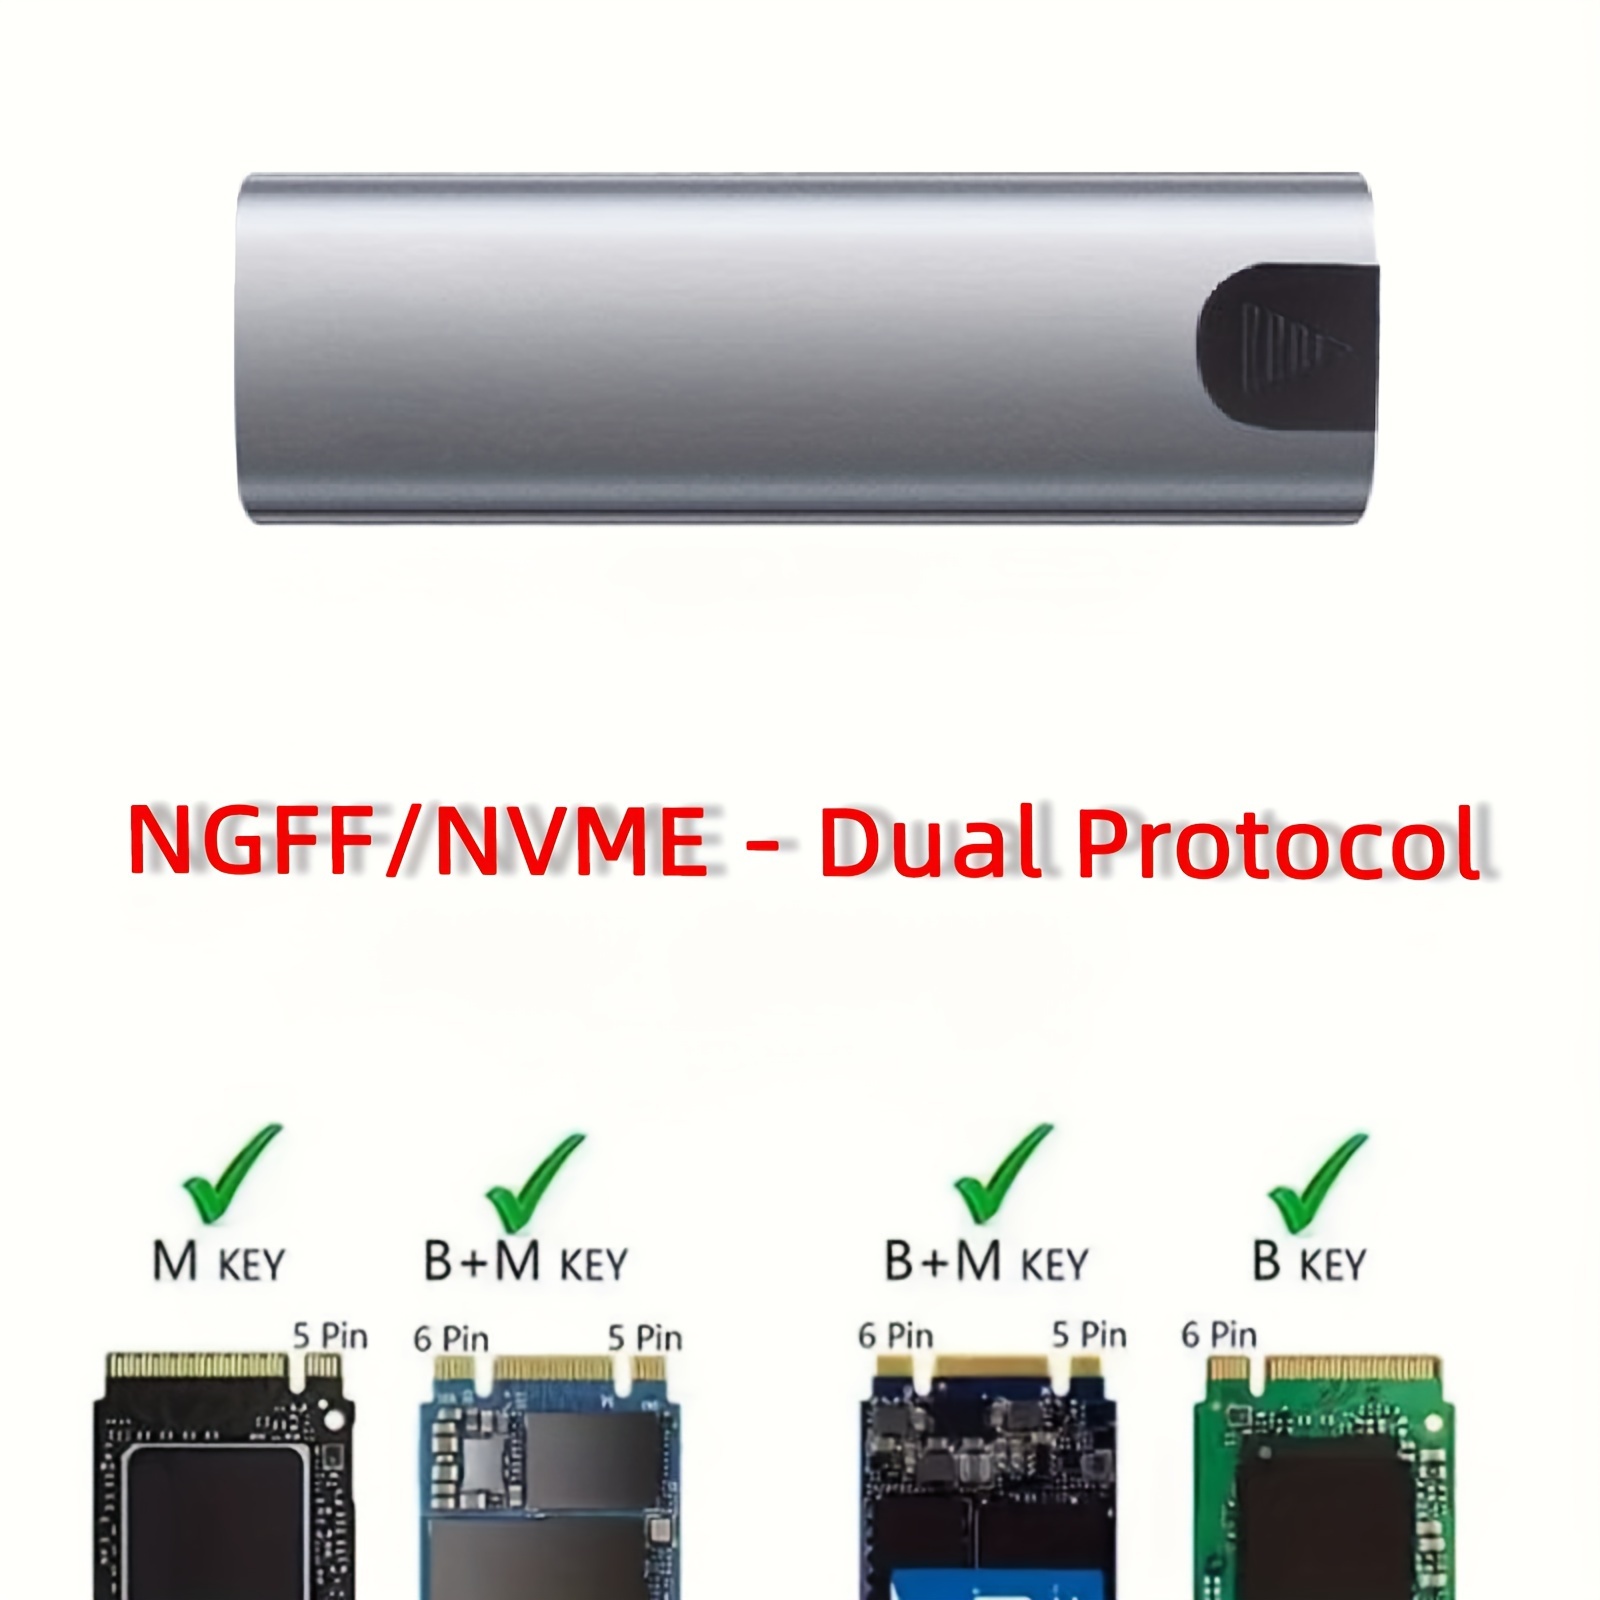 Dual Protocol M.2 Nvme SSD Enclosure 10Gbps USB 3.1 Aluminum